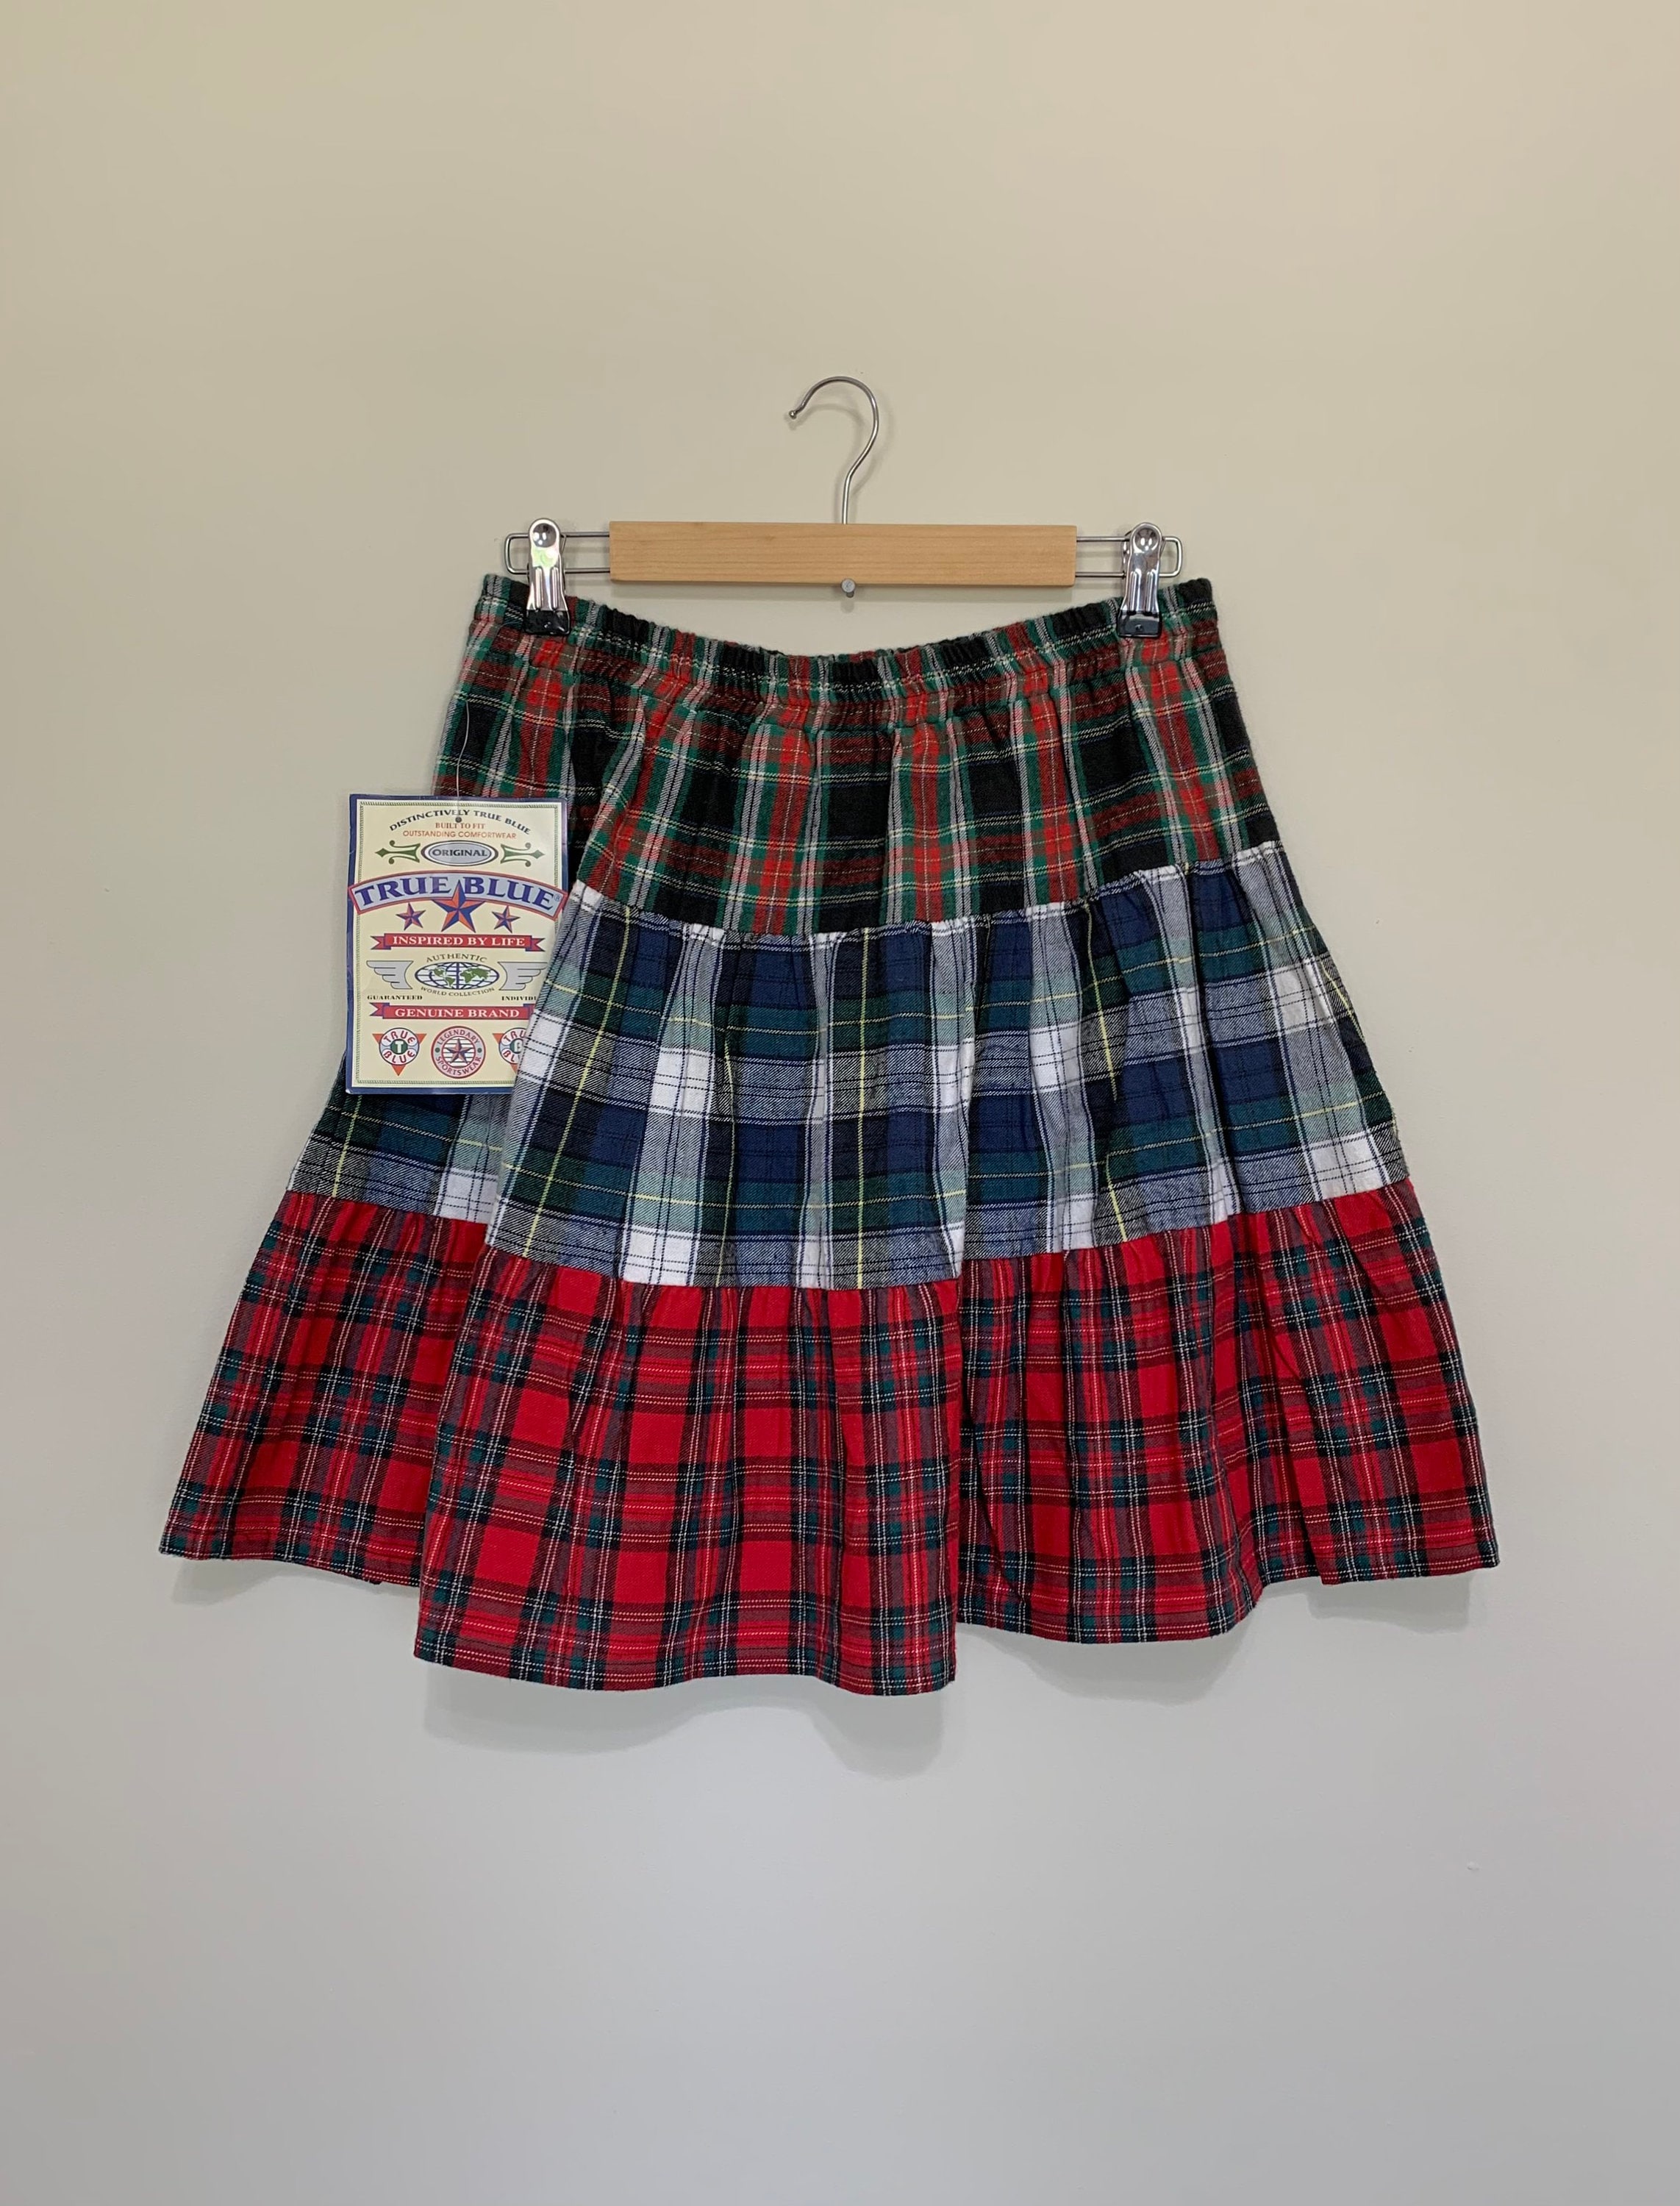 90s Plaid Skirt / Vintage Plaid Skirt Flannel / 90s Grunge - Etsy UK